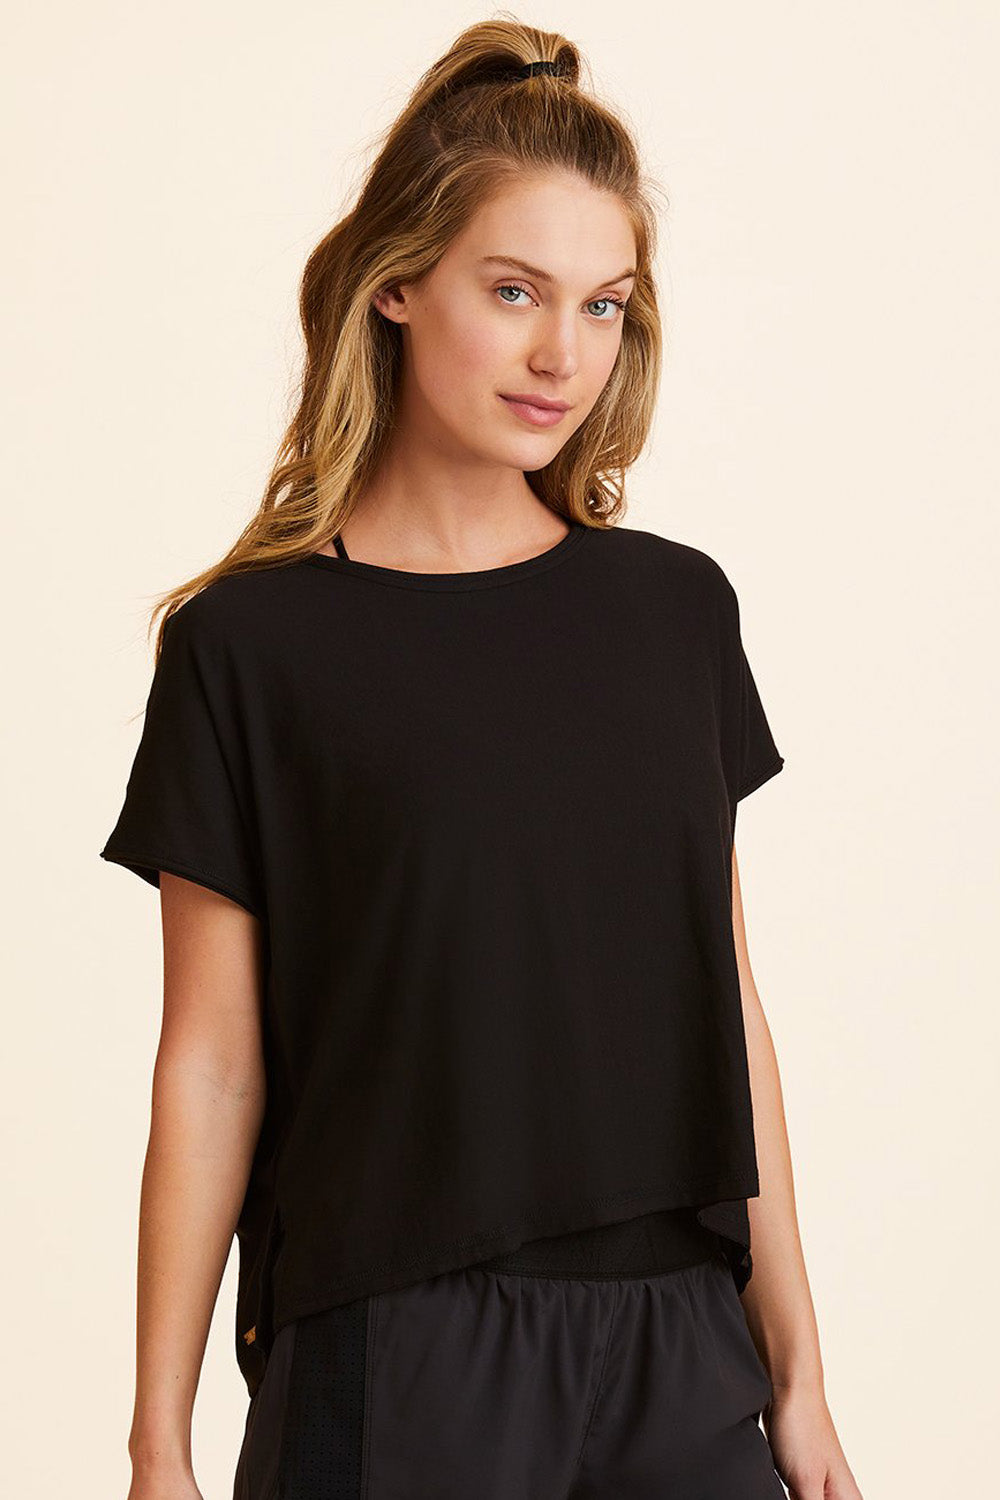 Tee | Black Black T-Shirt - Breakers Alala Oversized T-Shirt | Lounge